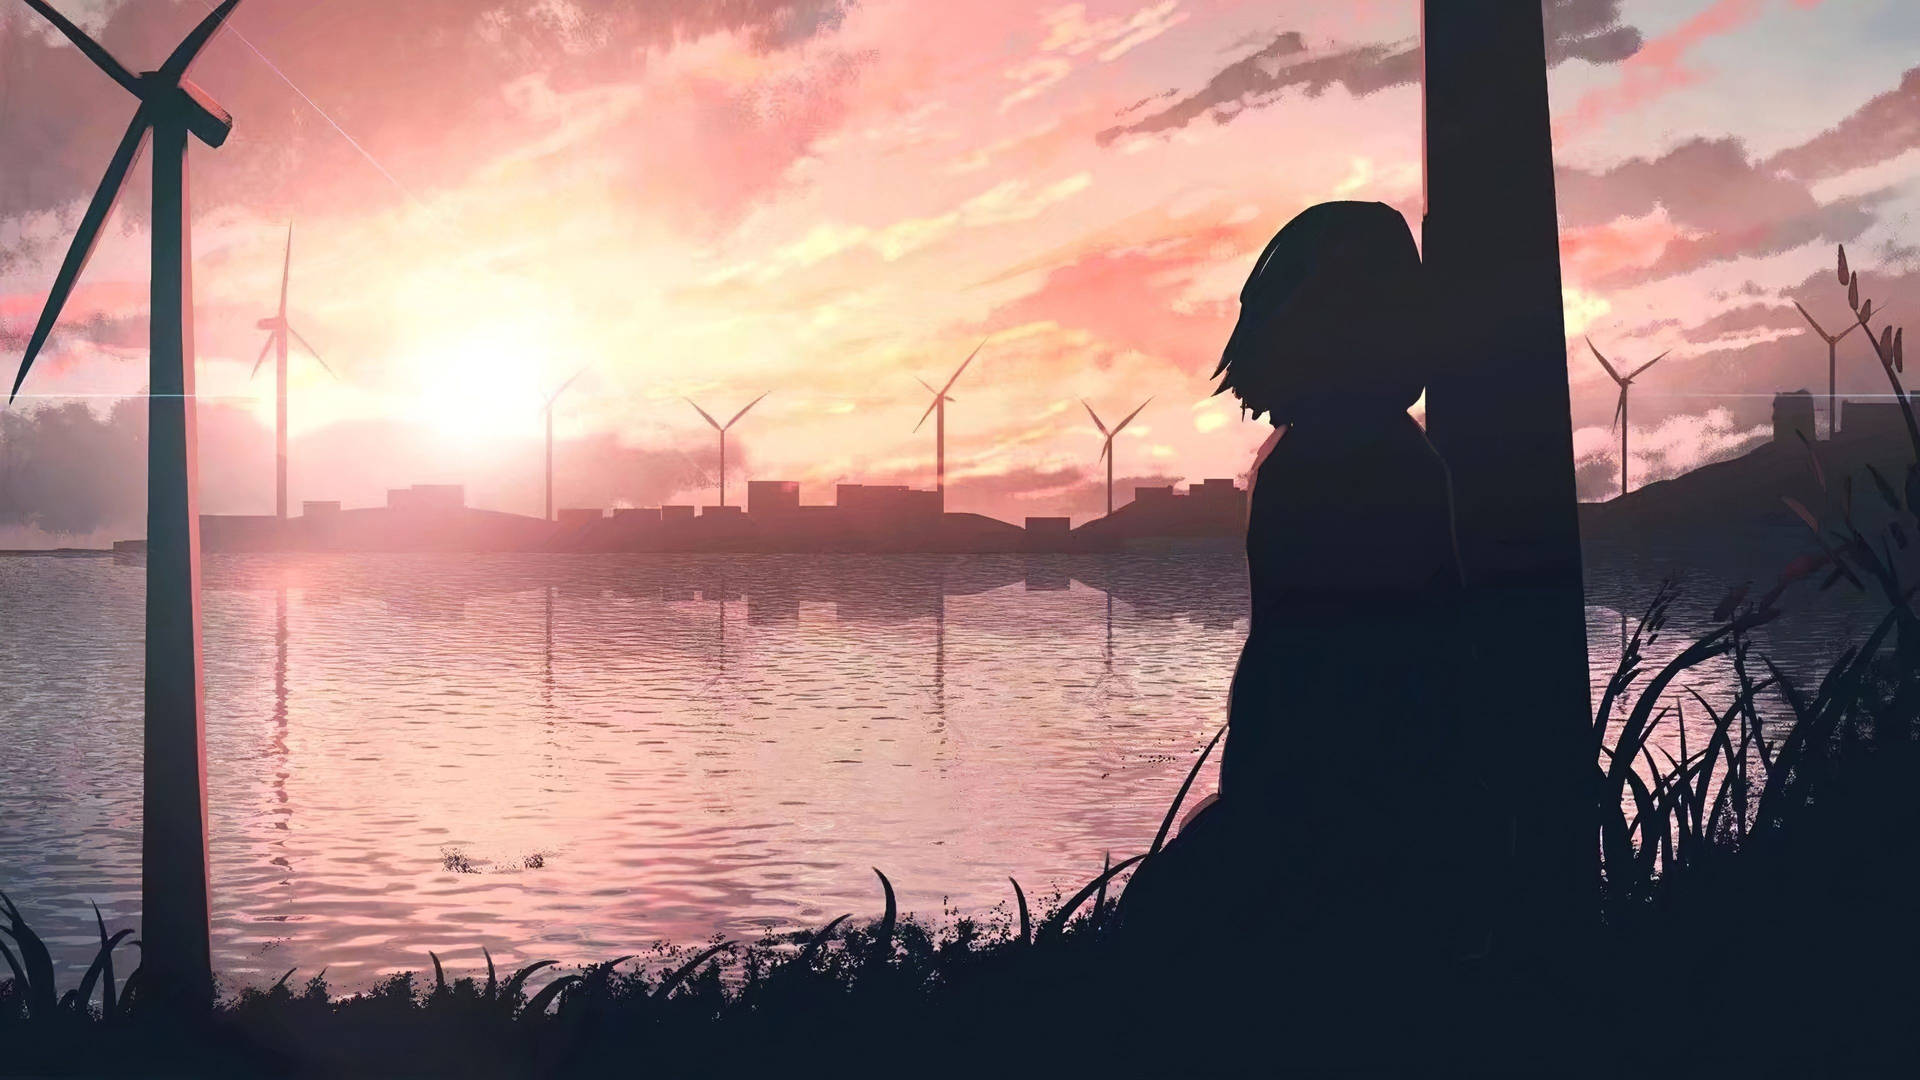 Anime Girl Sad Alone By Lake With Windmills